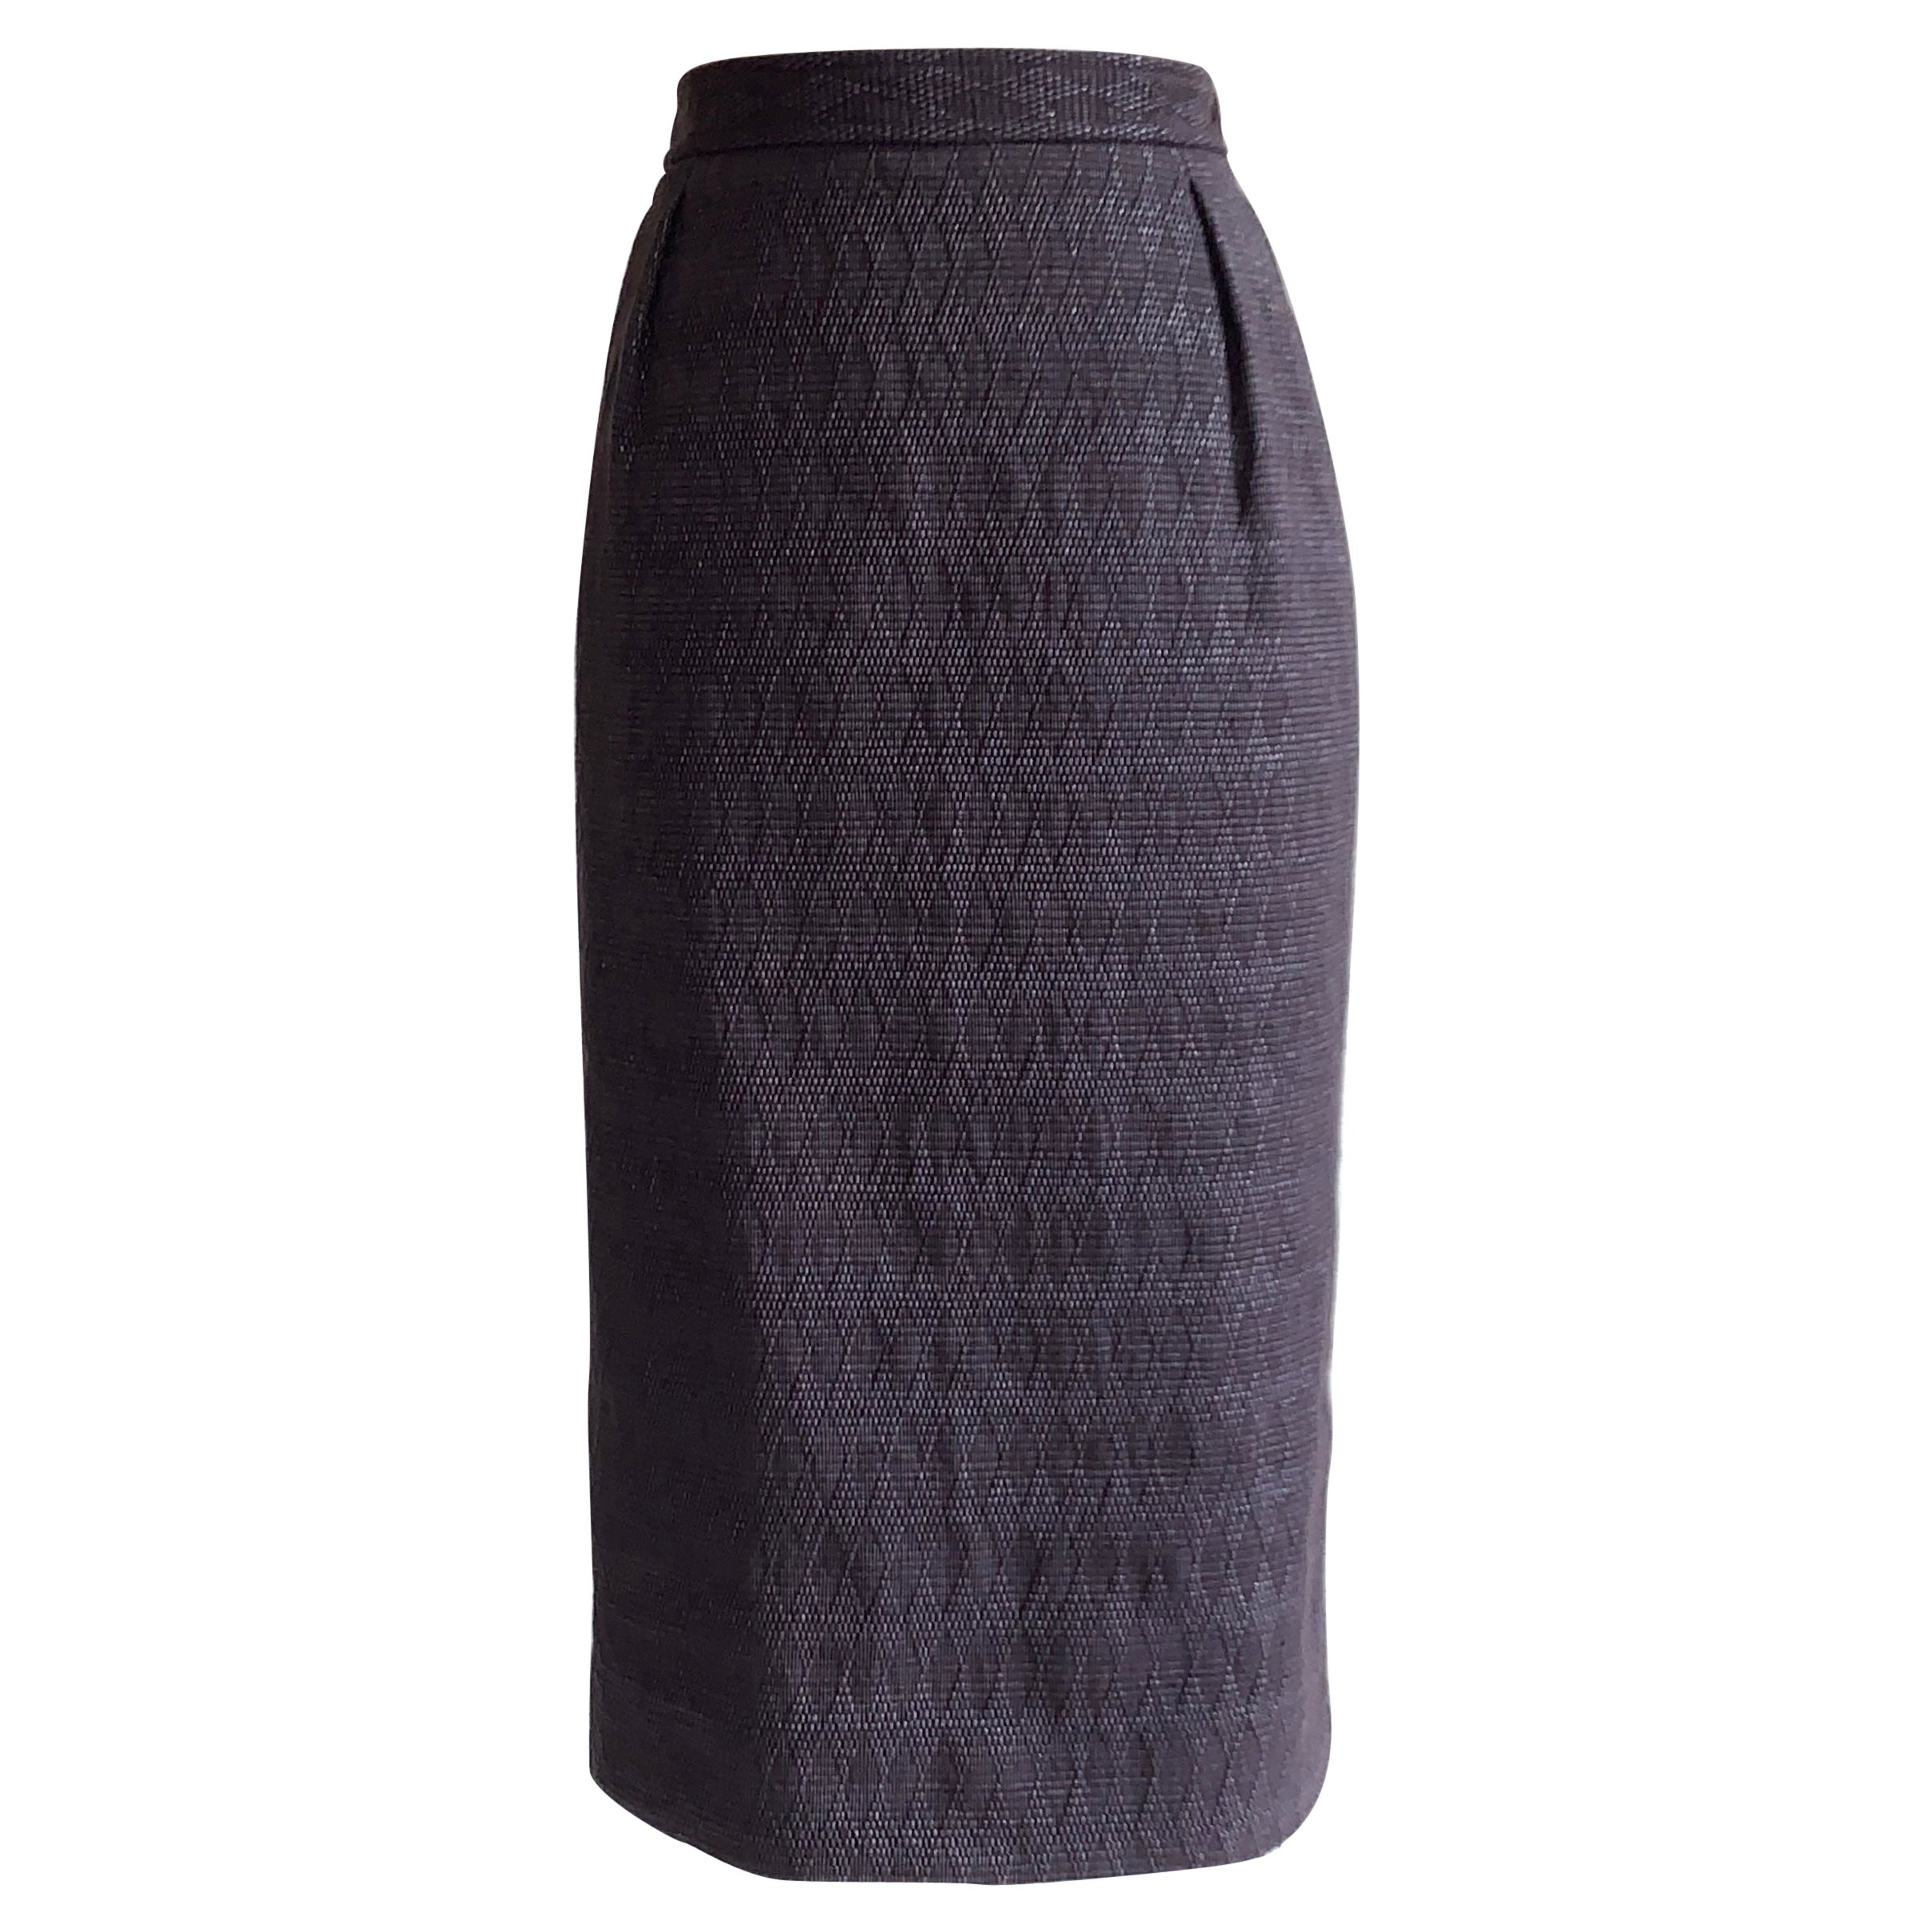 2000s Yves Saint Laurent Rive Gauche Purple Diamond Weave Pencil Skirt